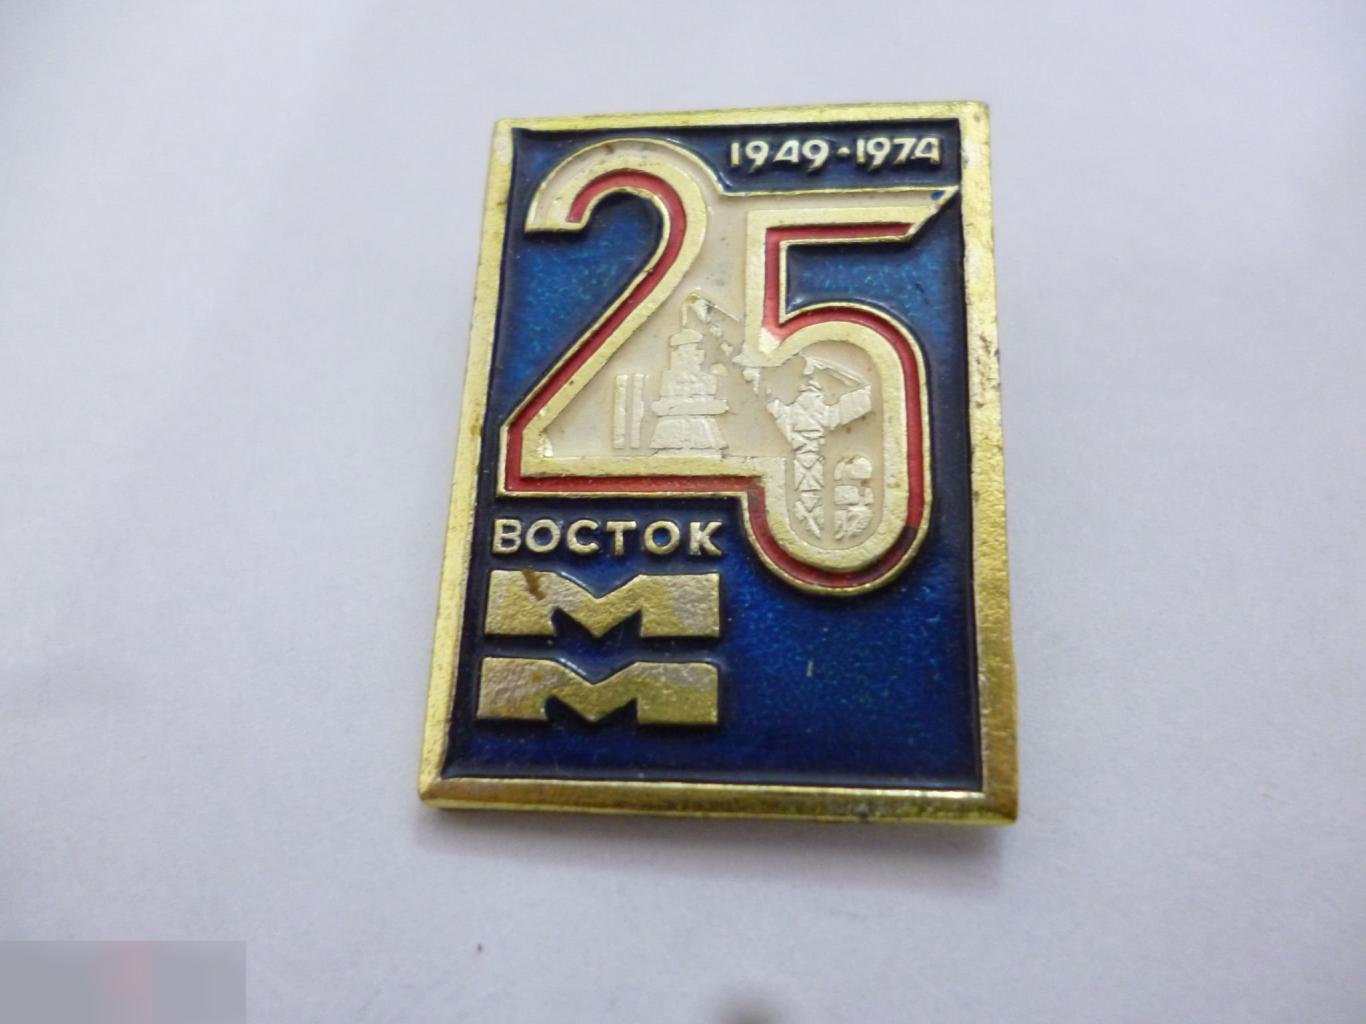 №21 Востокметаллургмонтаж " Восток ММ " 25 лет 1949 - 1974